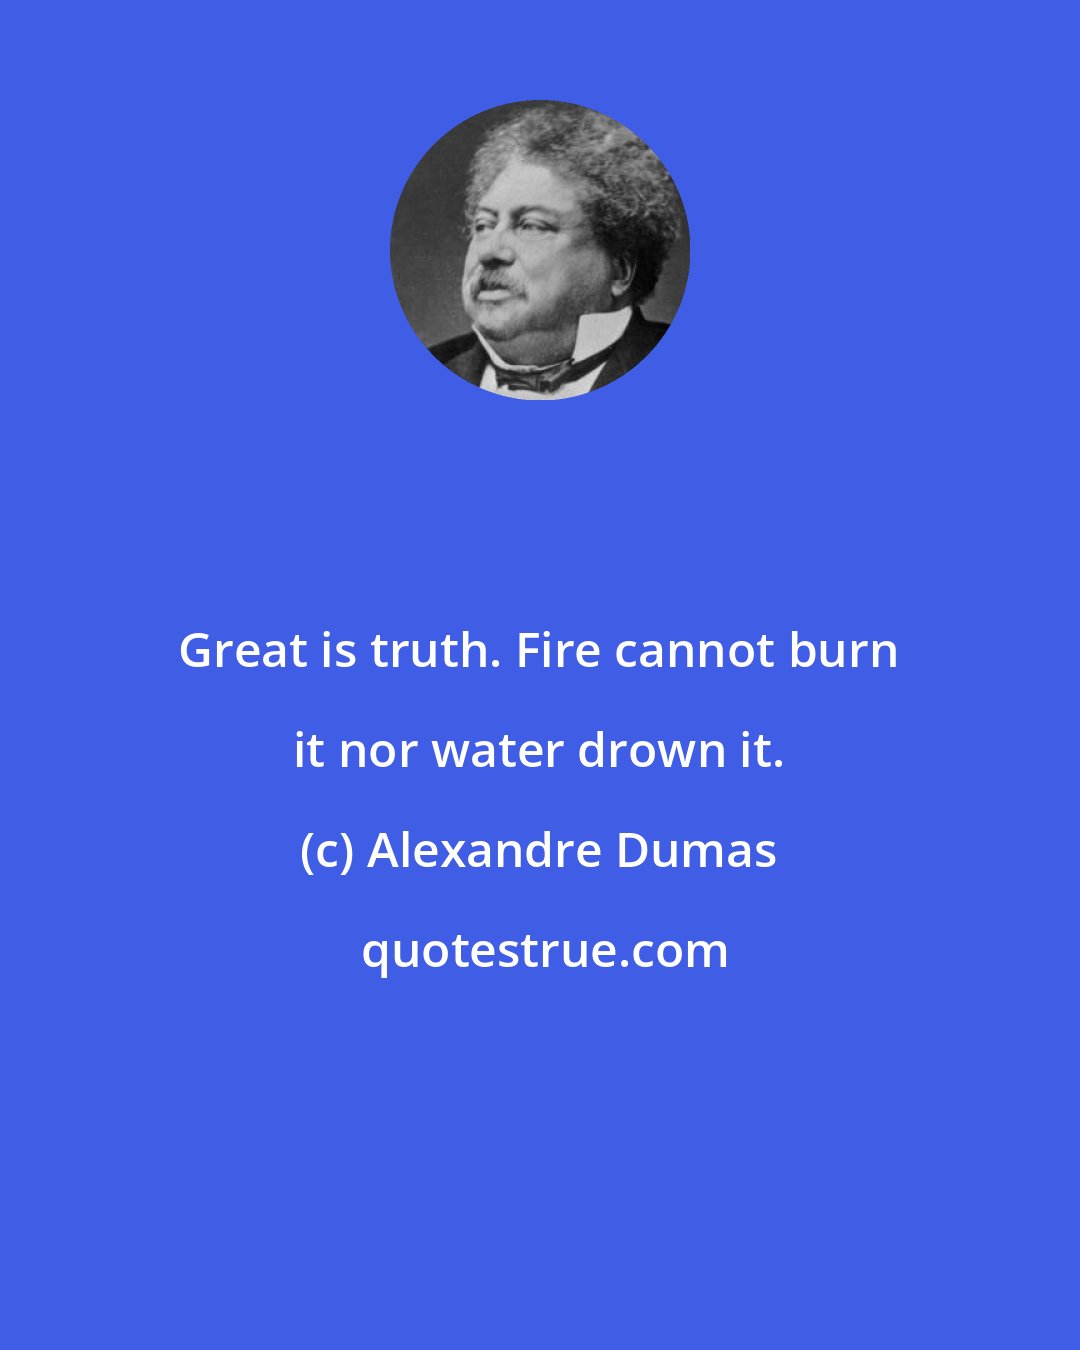 Alexandre Dumas: Great is truth. Fire cannot burn it nor water drown it.